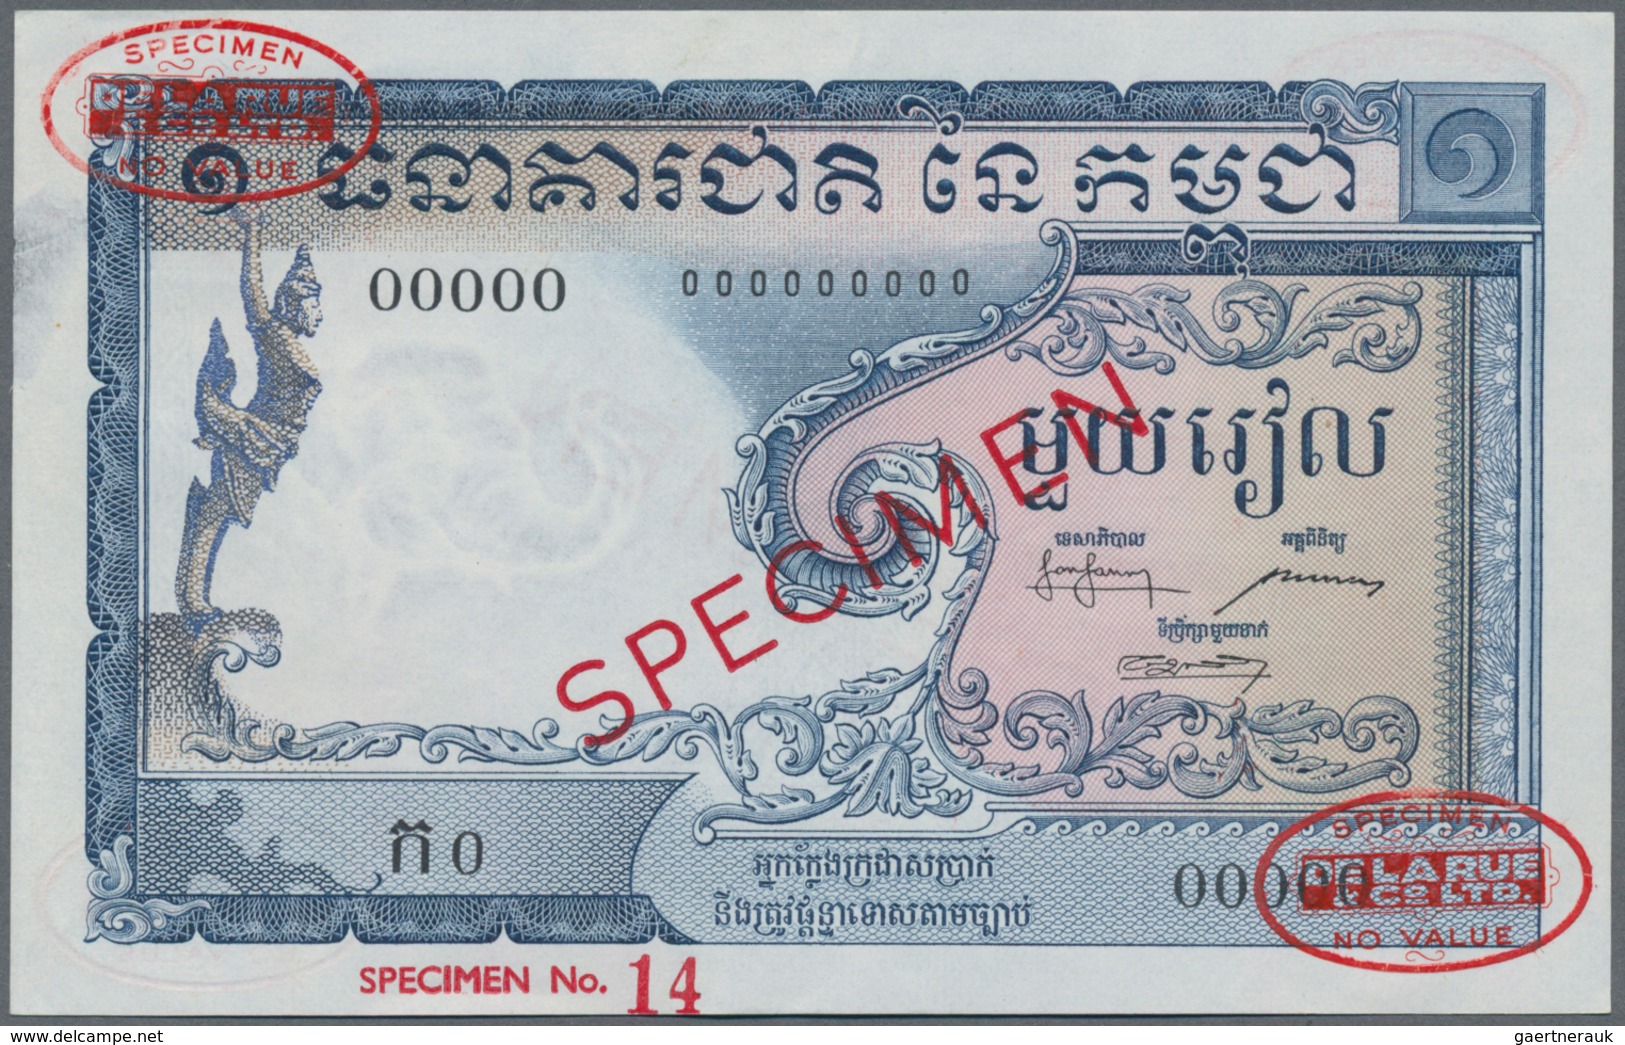 Cambodia / Kambodscha: Banque Nationale Du Cambodge 1 Riel ND(1955) DLR Specimen, P.1s, Traces Of Gl - Kambodscha